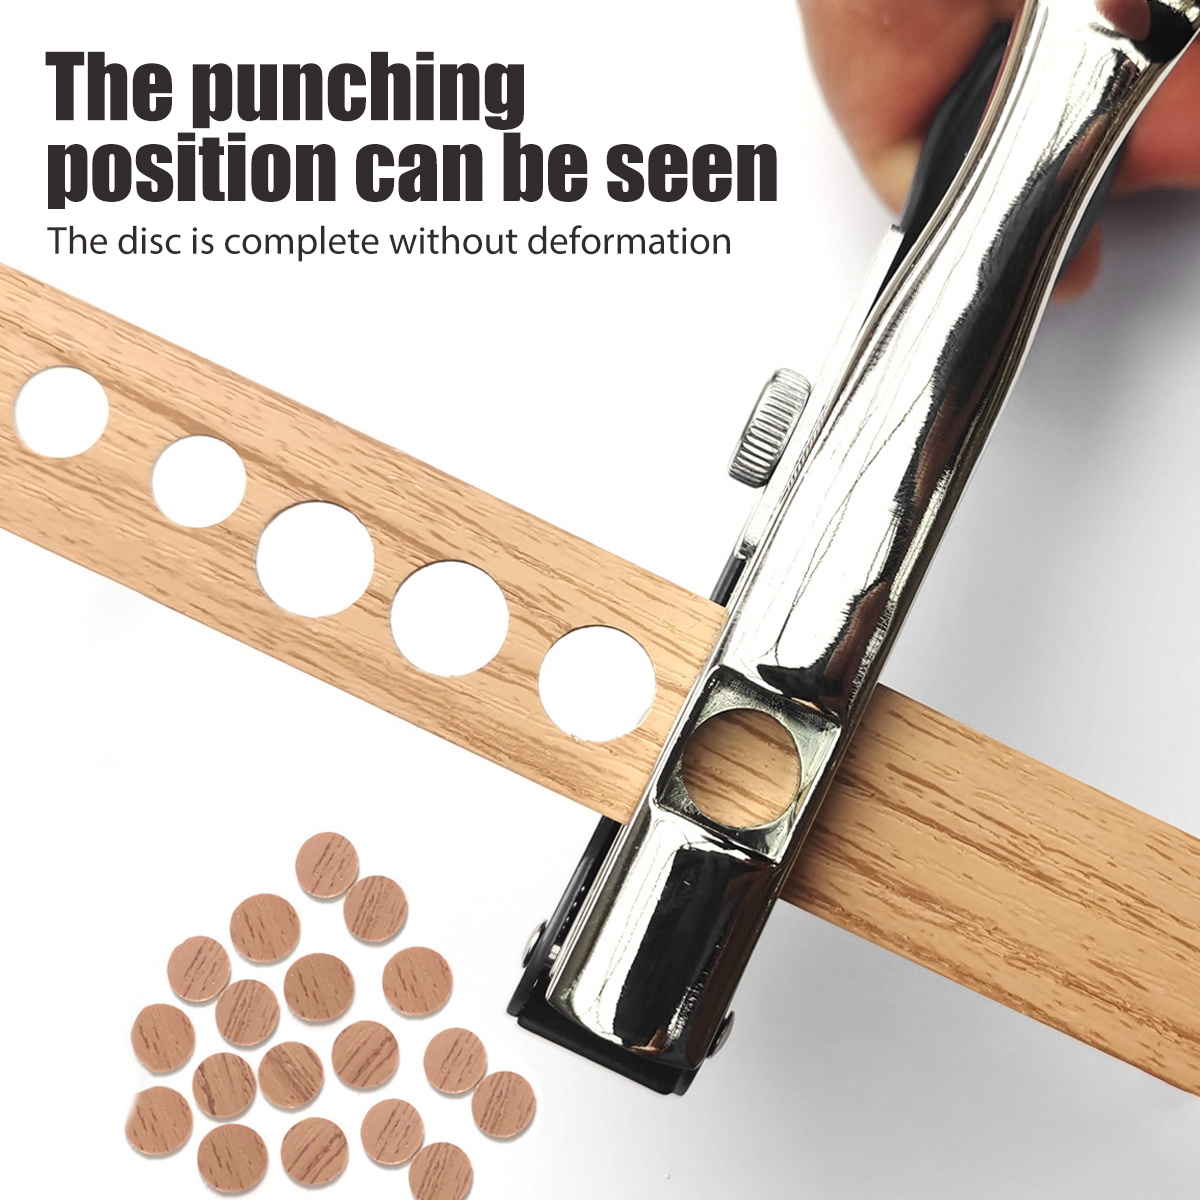  InTheOffice Single Hole Puncher, Small Hole Punch